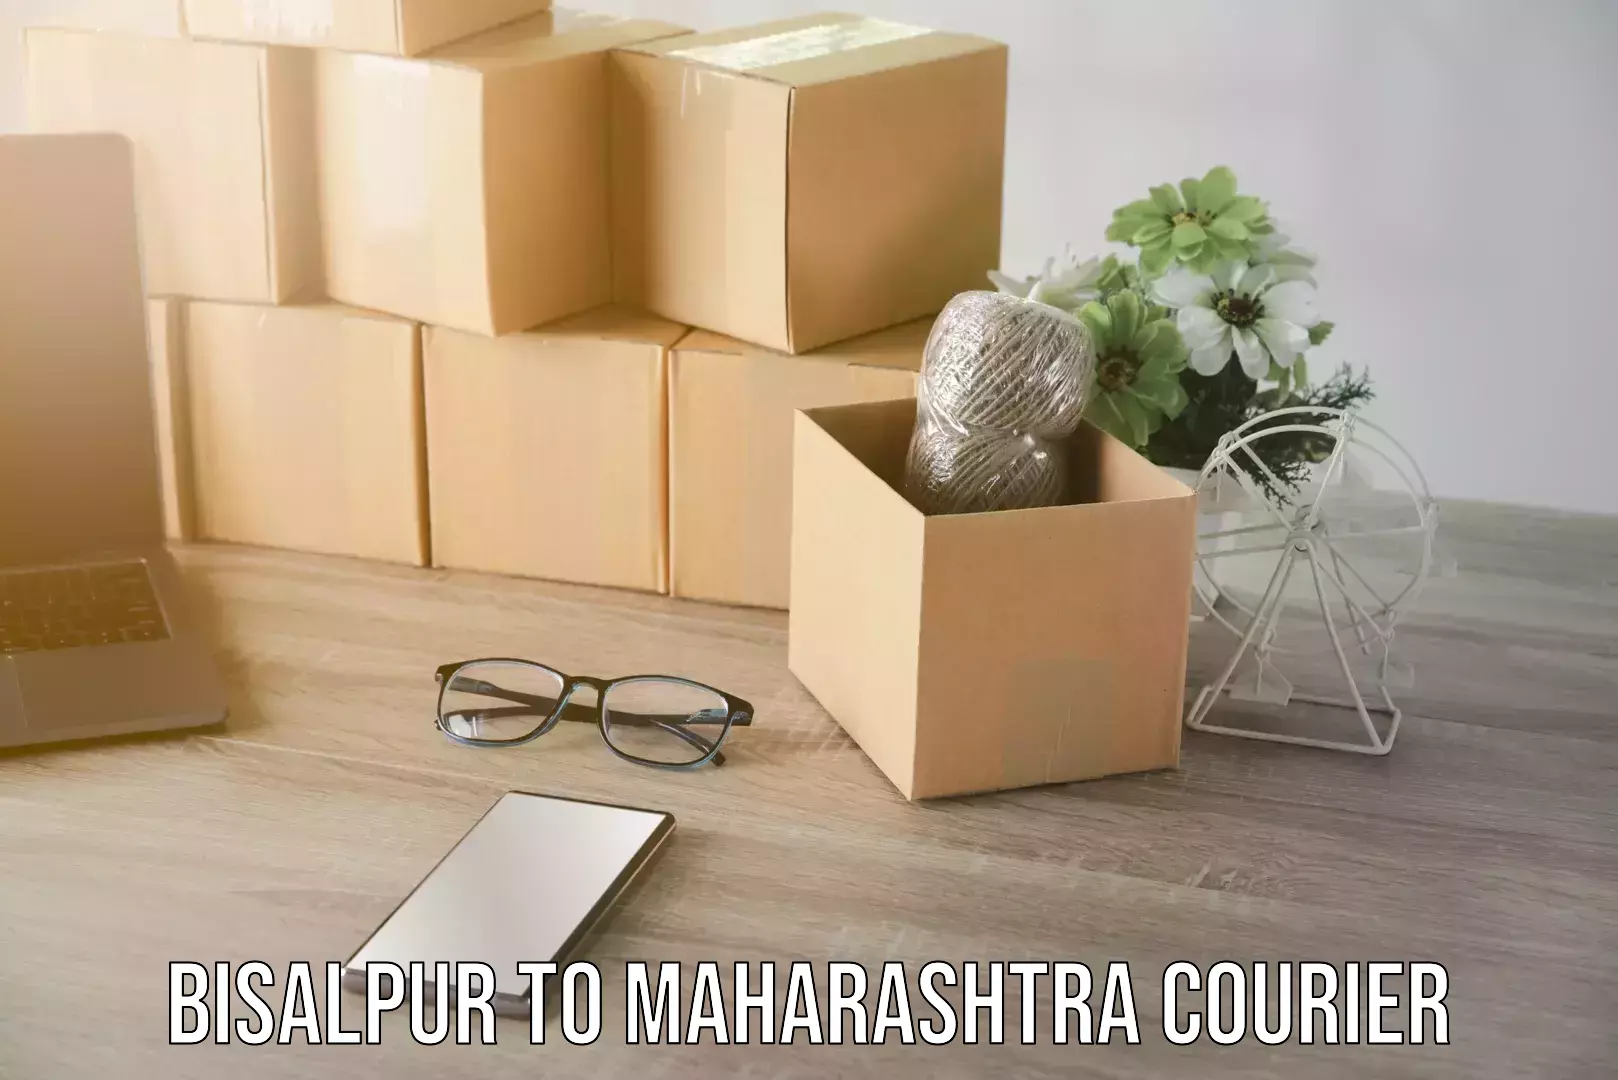 Digital courier platforms Bisalpur to Maharashtra